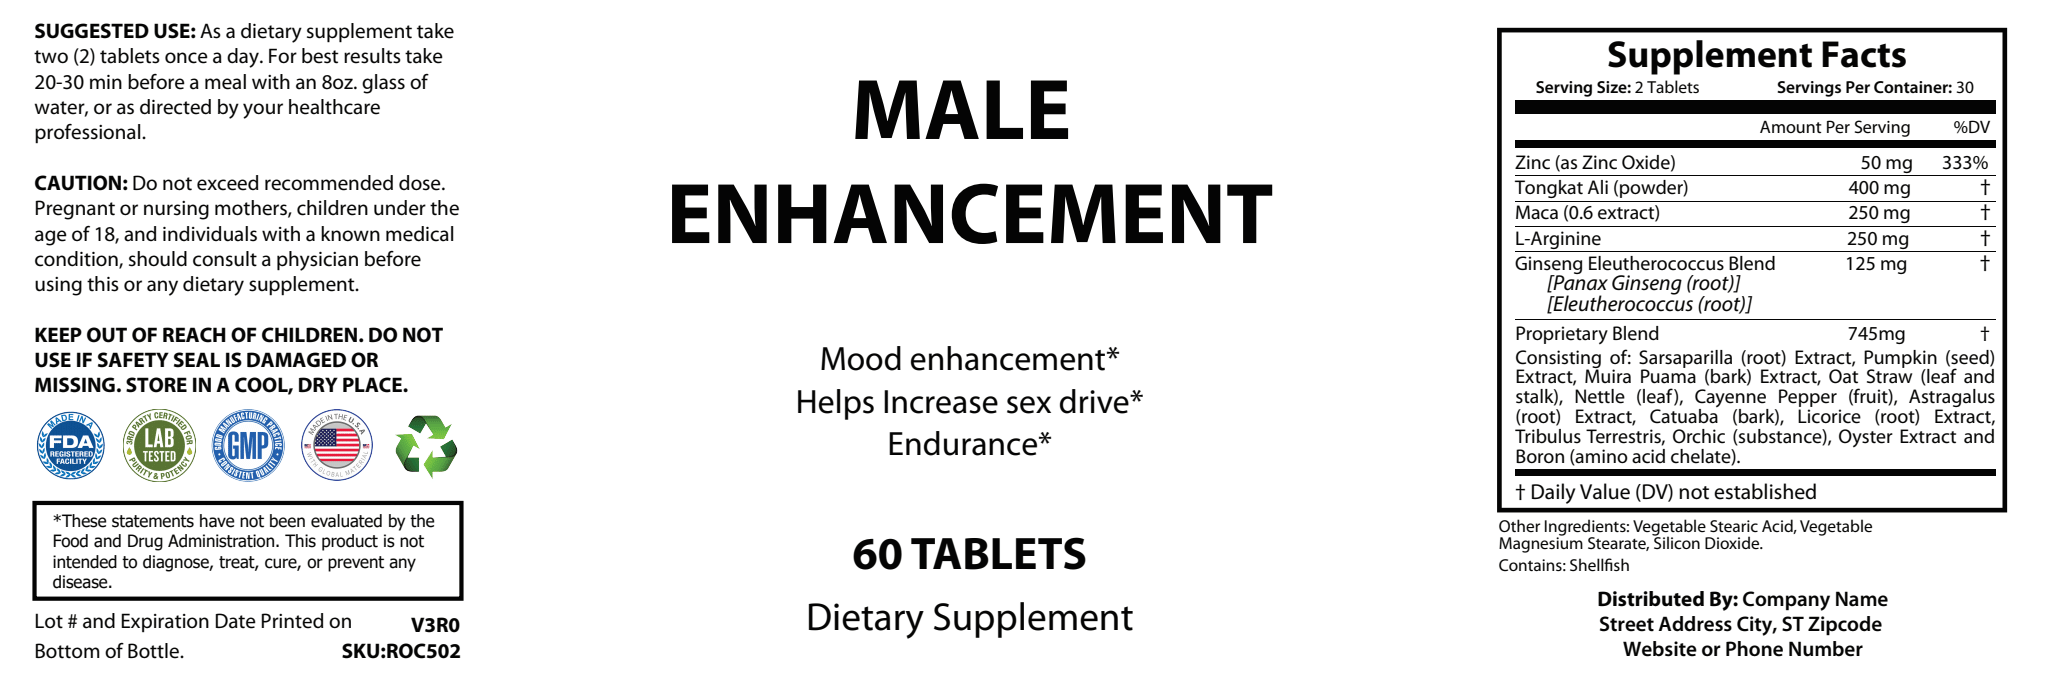 Male Enhancement